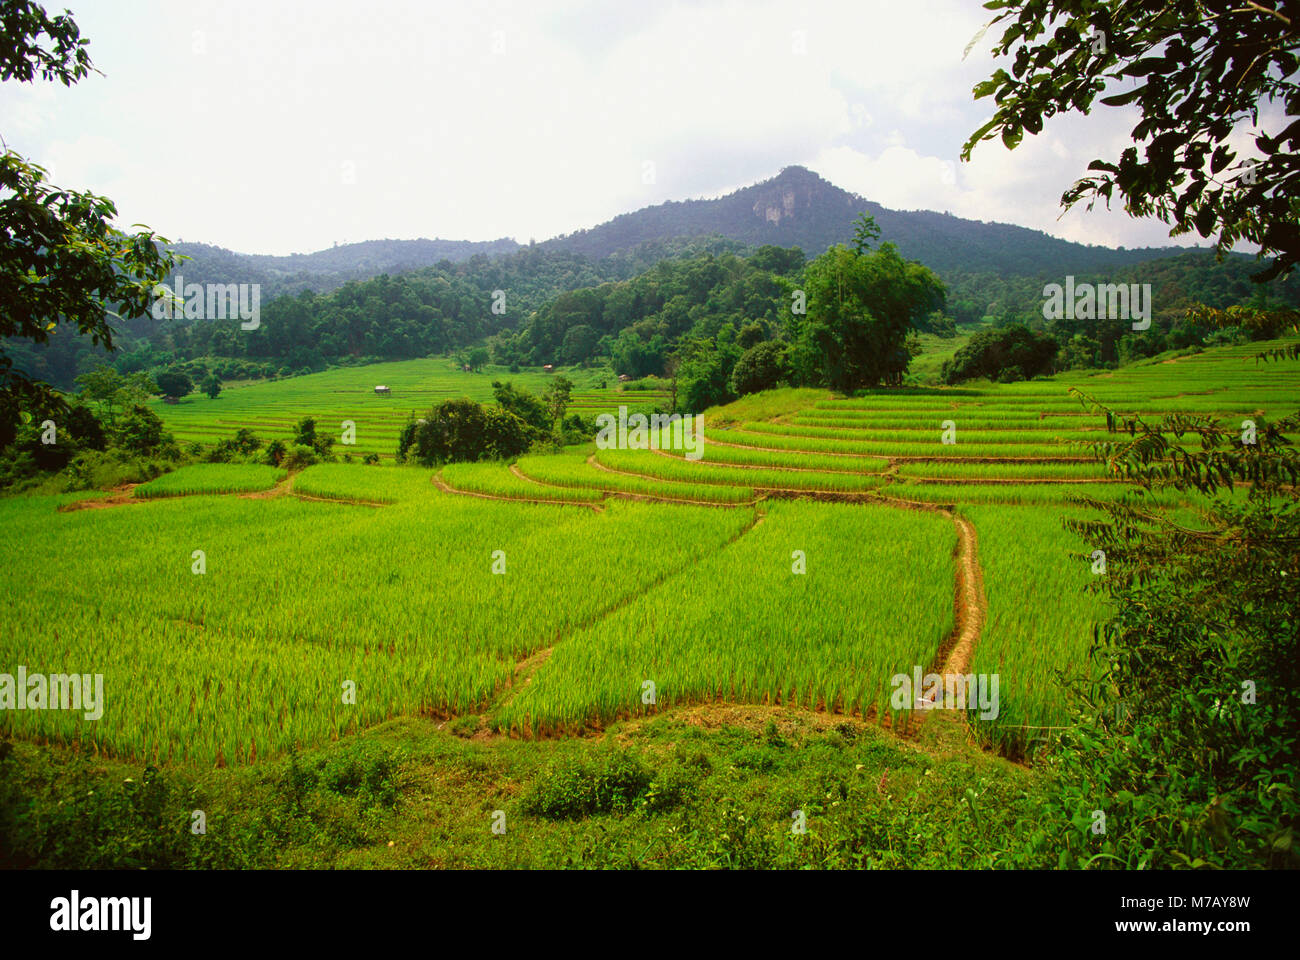 Rice crop in fields, Doi inthanon, Thailand Stock Photo